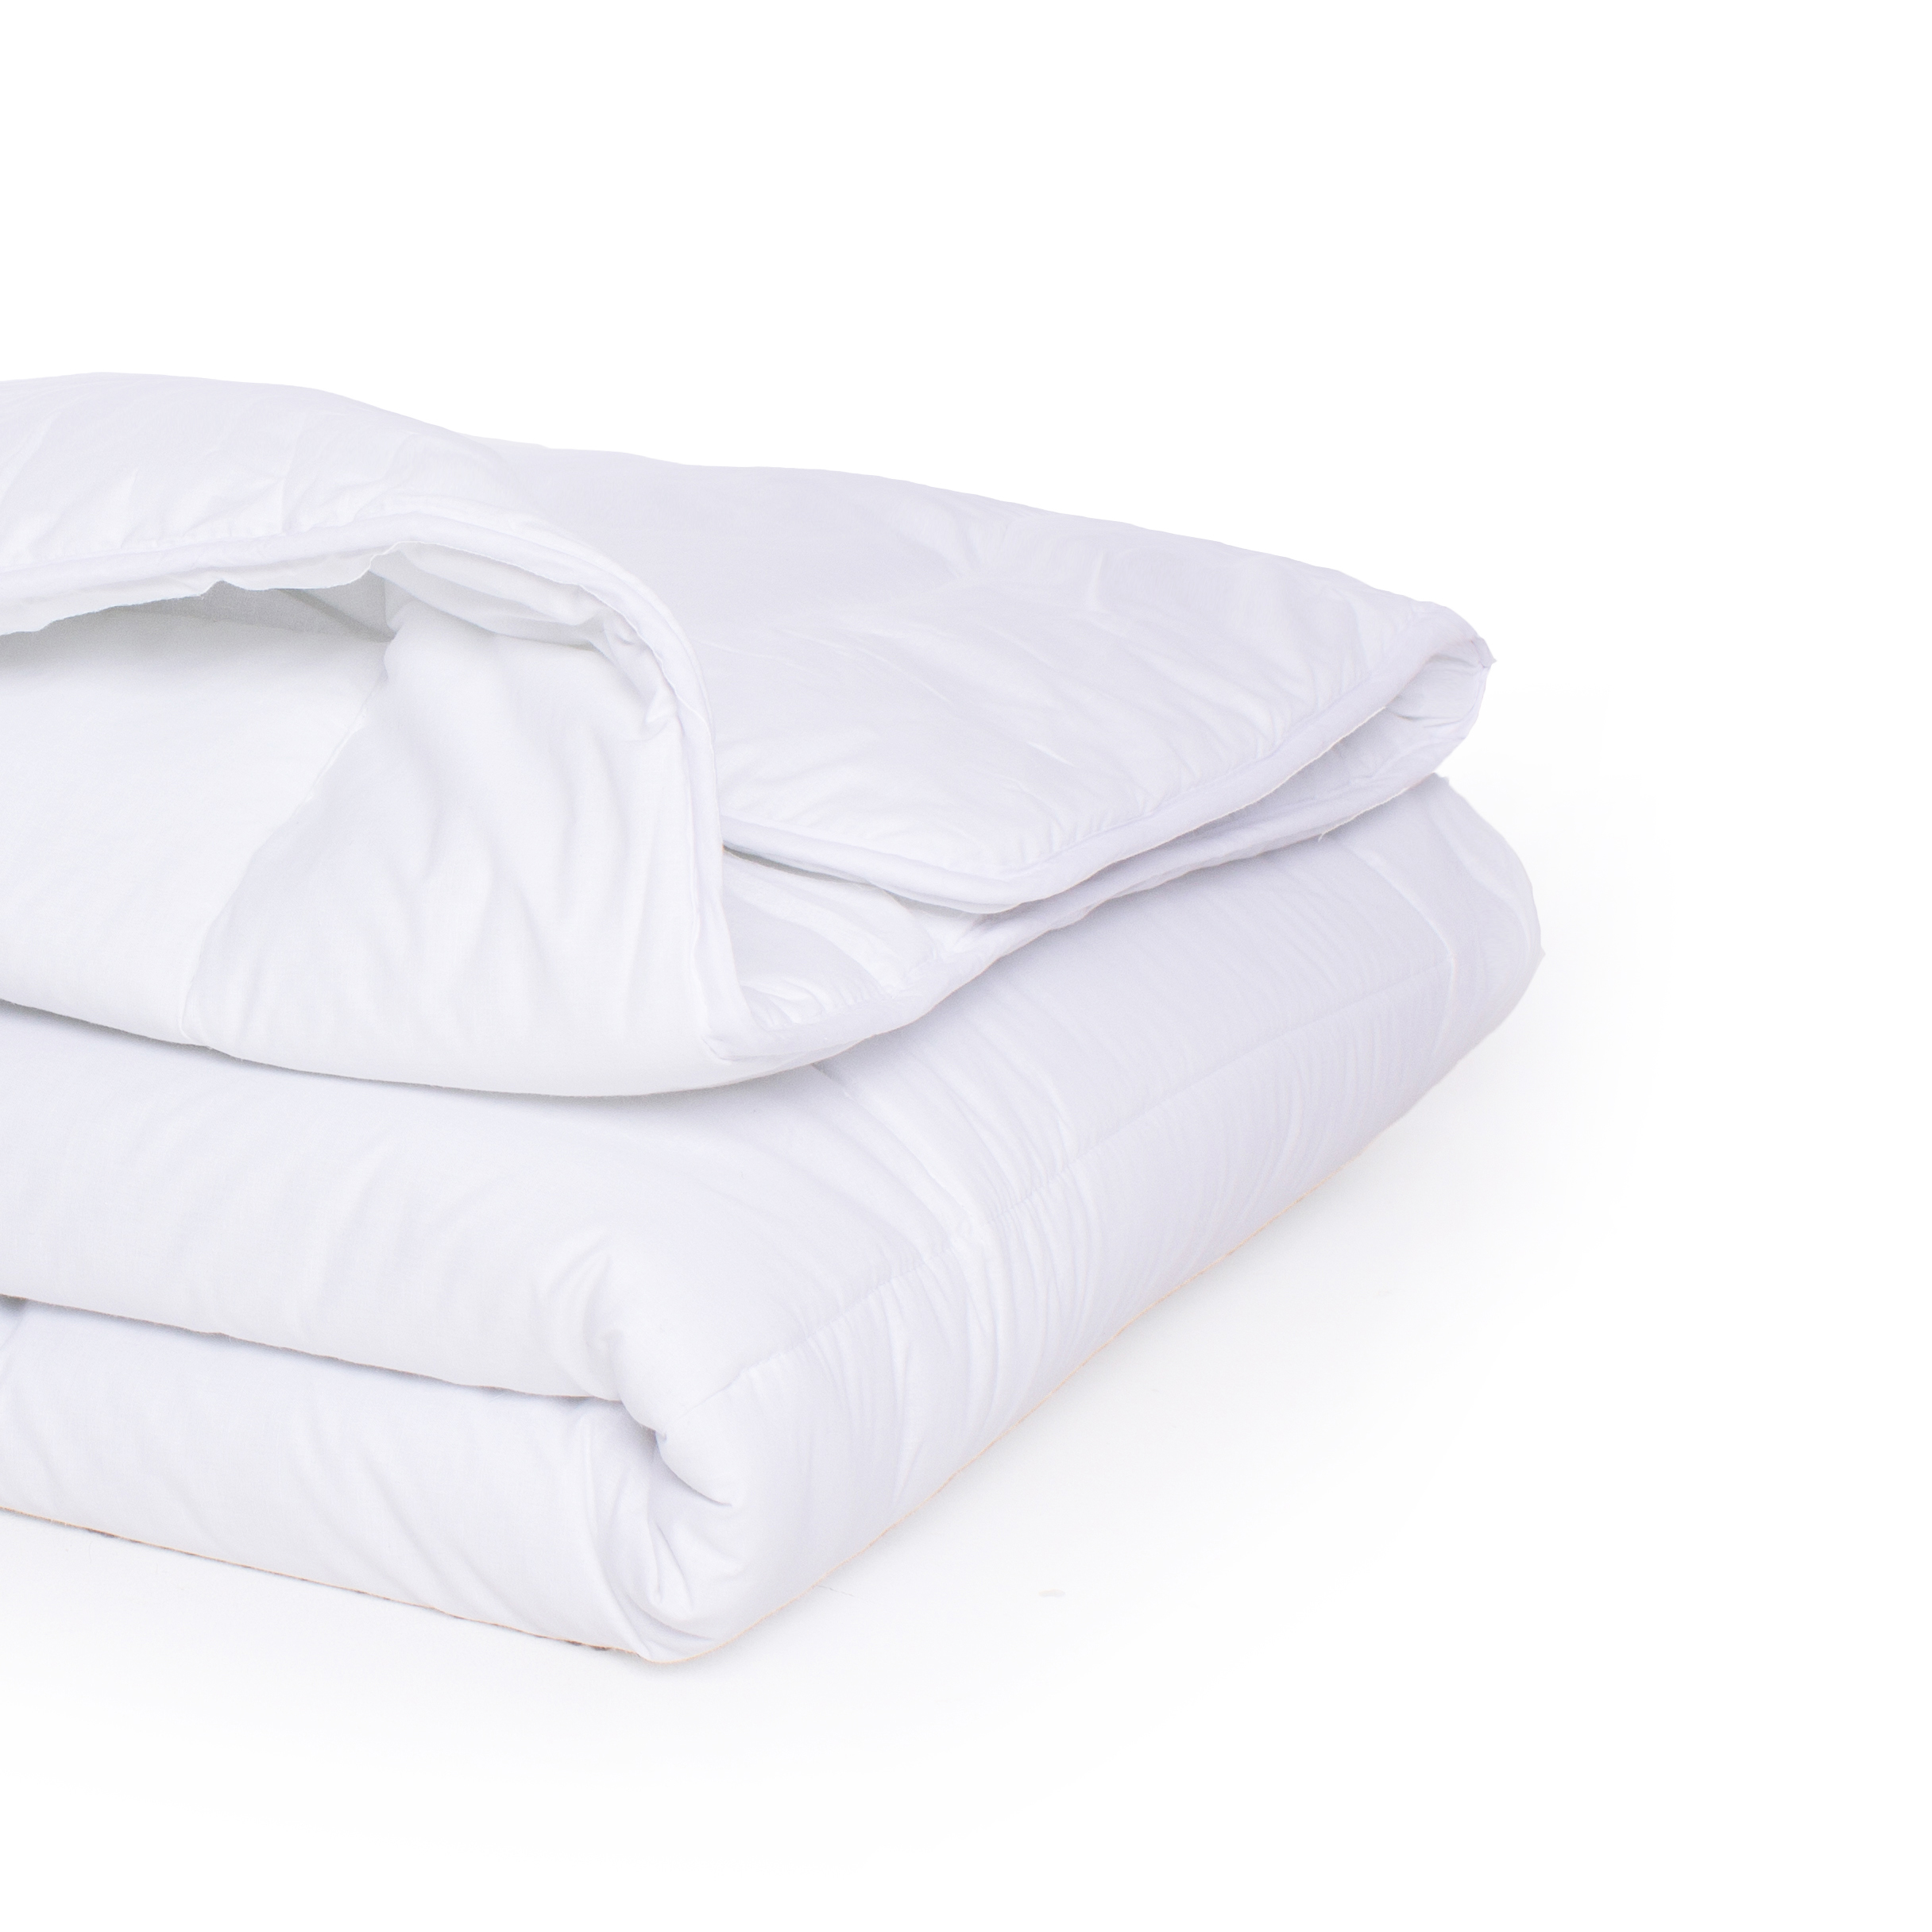 Одеяло шерстяное MirSon Bianco Экстра Премиум №0786, демисезонное, 155x215 см, белое - фото 4